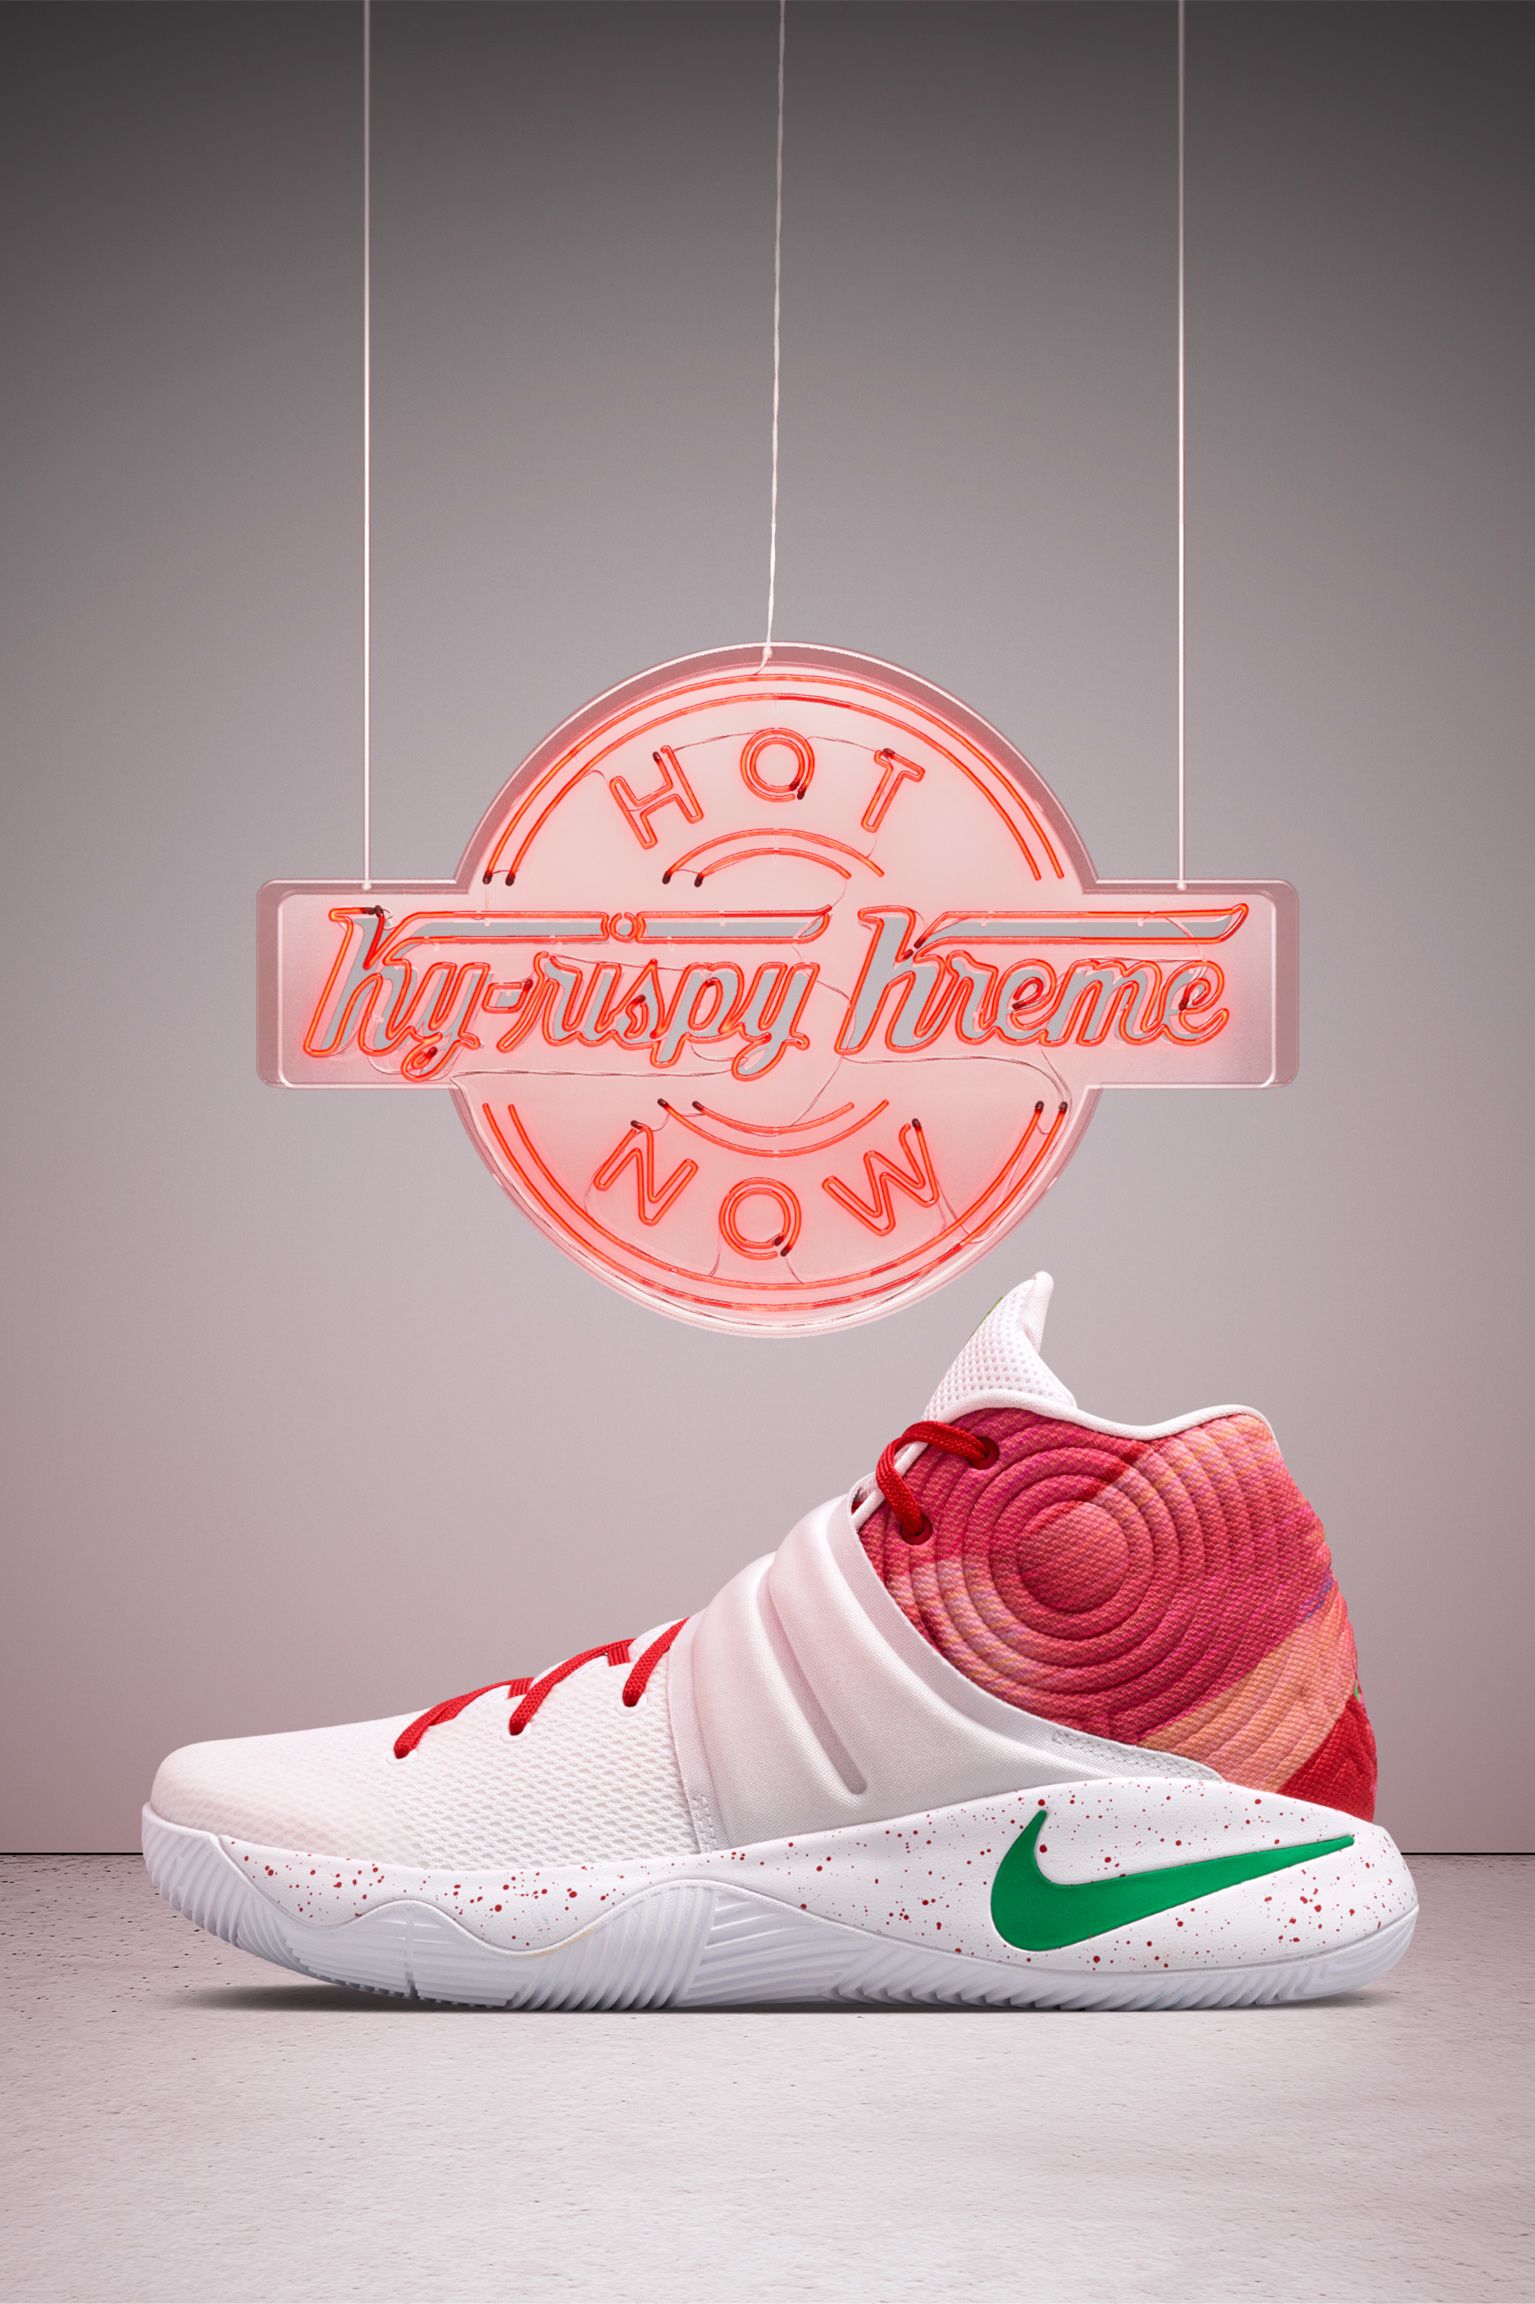 Nike Kyrie 2 'Ky-Rispy Kreme' iD 发布日 